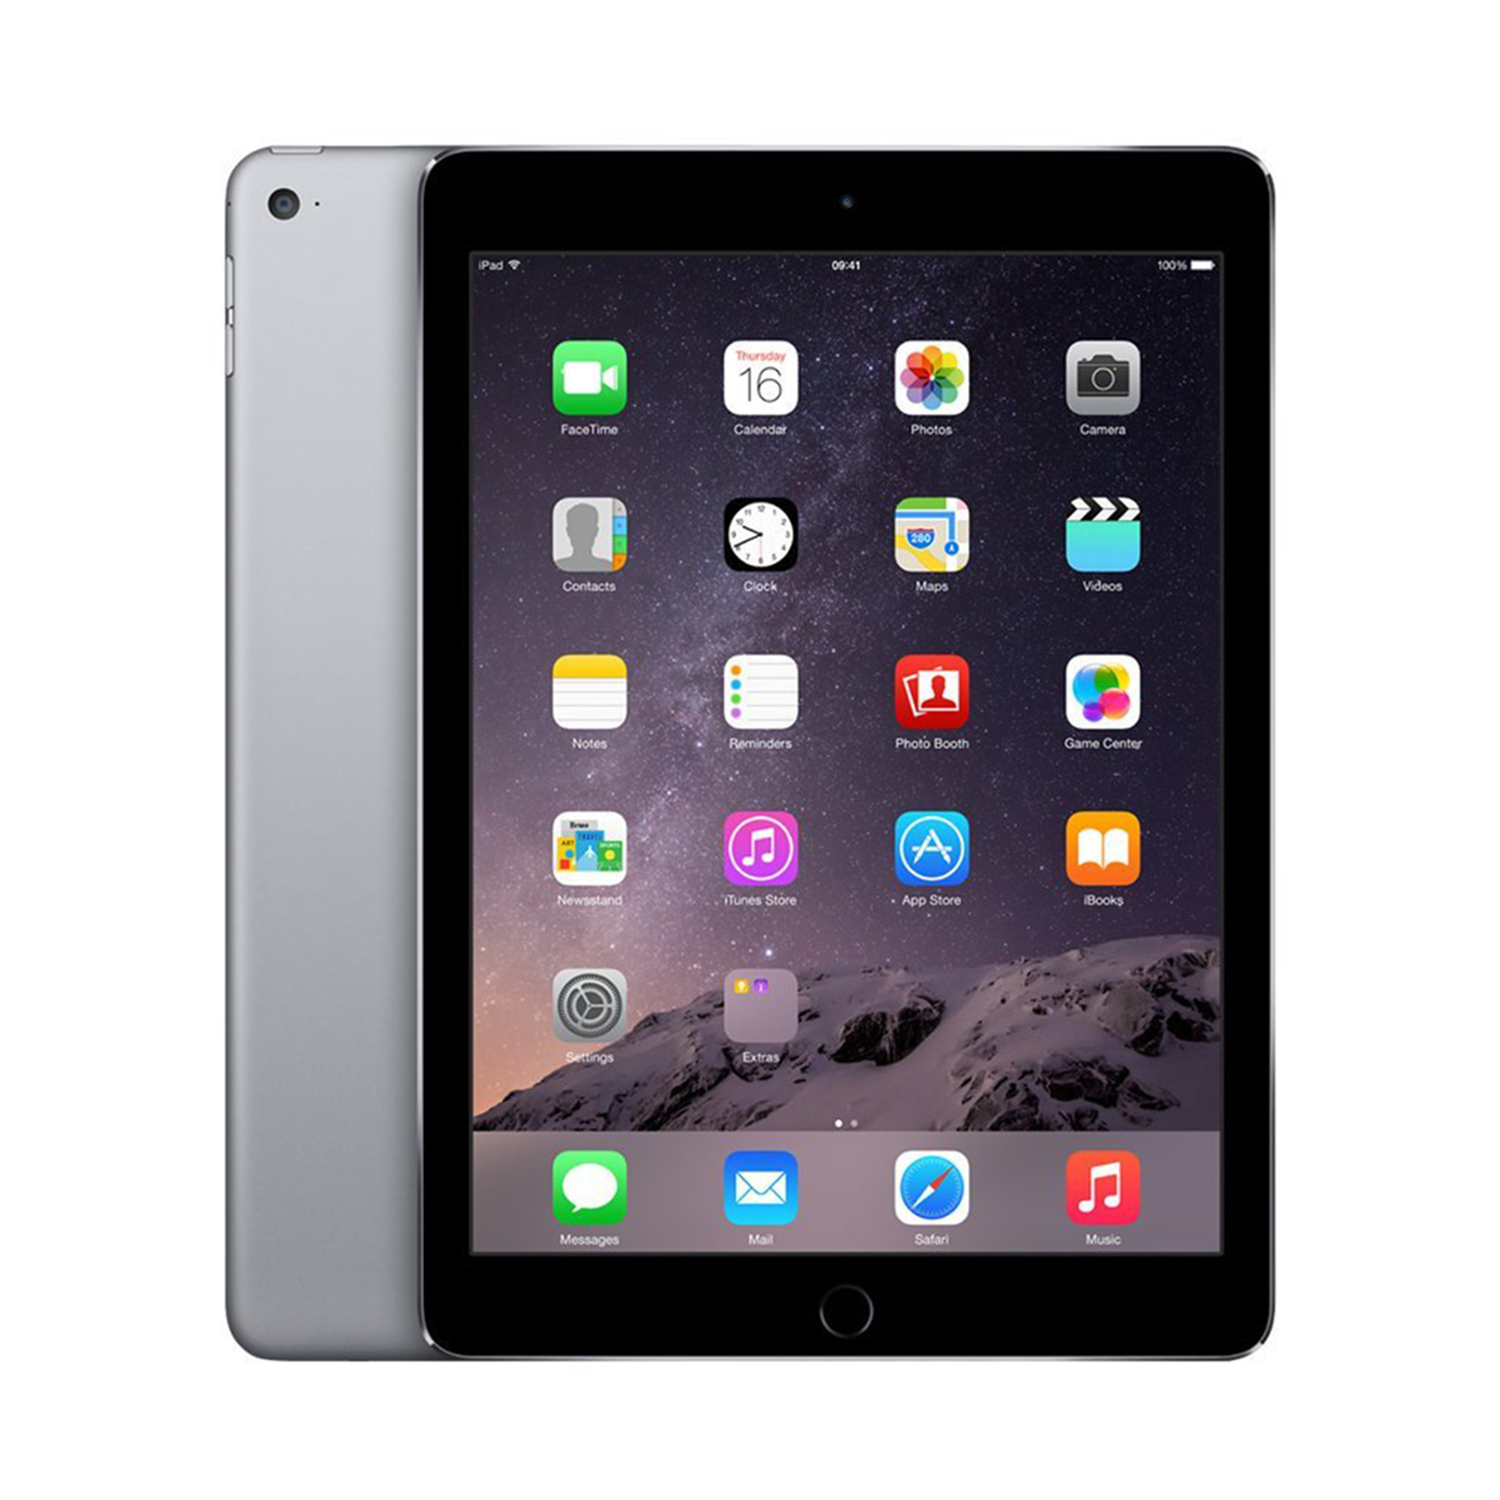 Restored Apple iPad Air 2 64GB 9.7 Retina Display Wi-Fi Tablet - Space Gray - MGKL2LL/A (Refurbished) - image 3 of 4